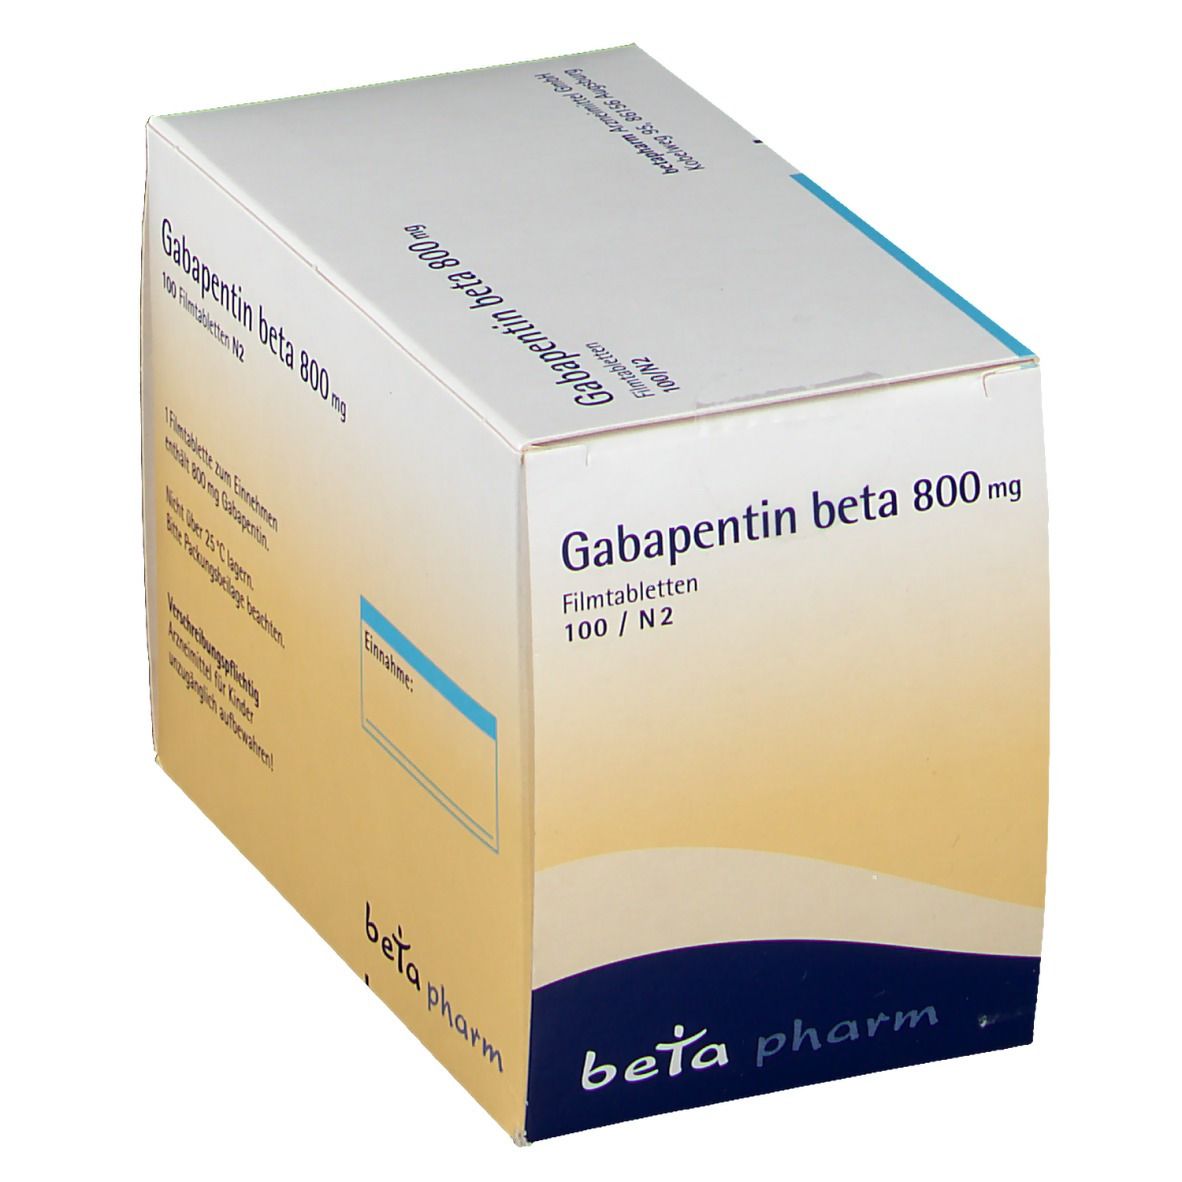 Gabapentin beta 800 mg